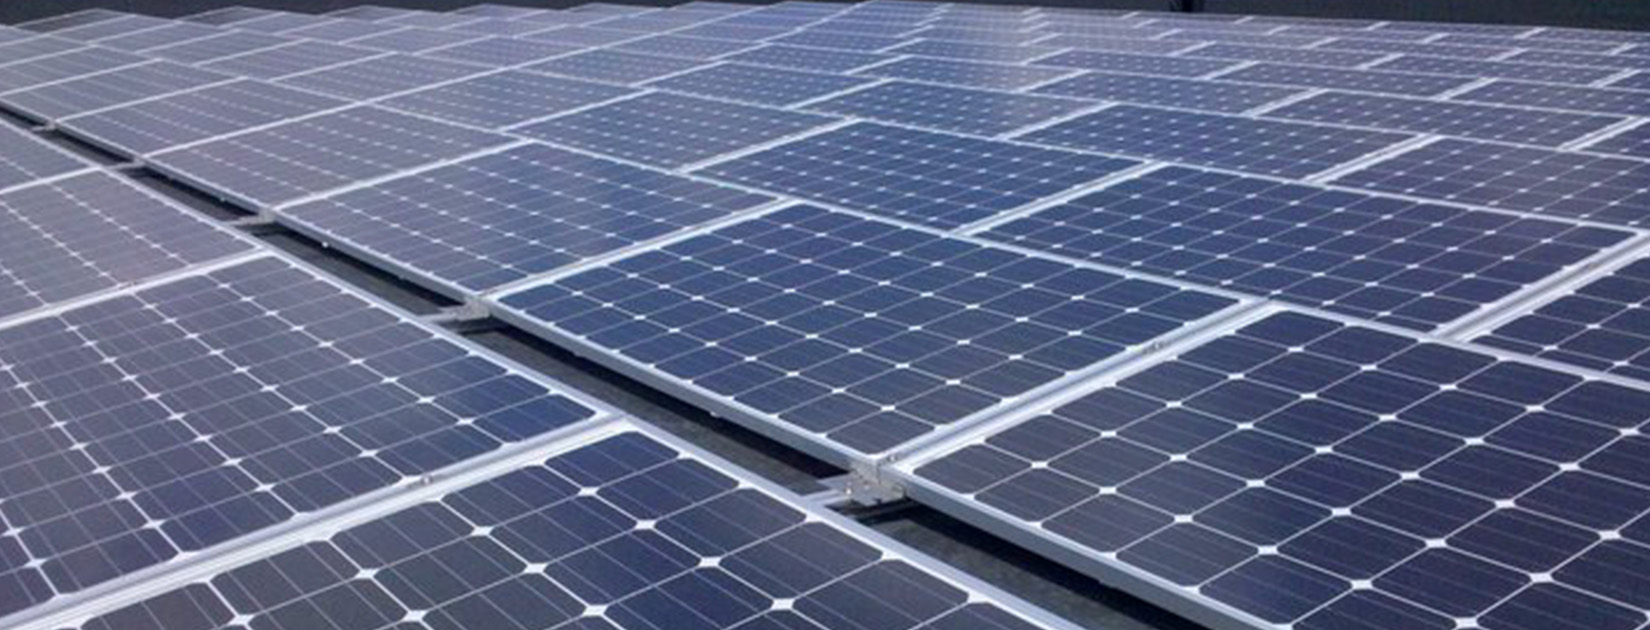 solar panels for municipalities in pennsylvania